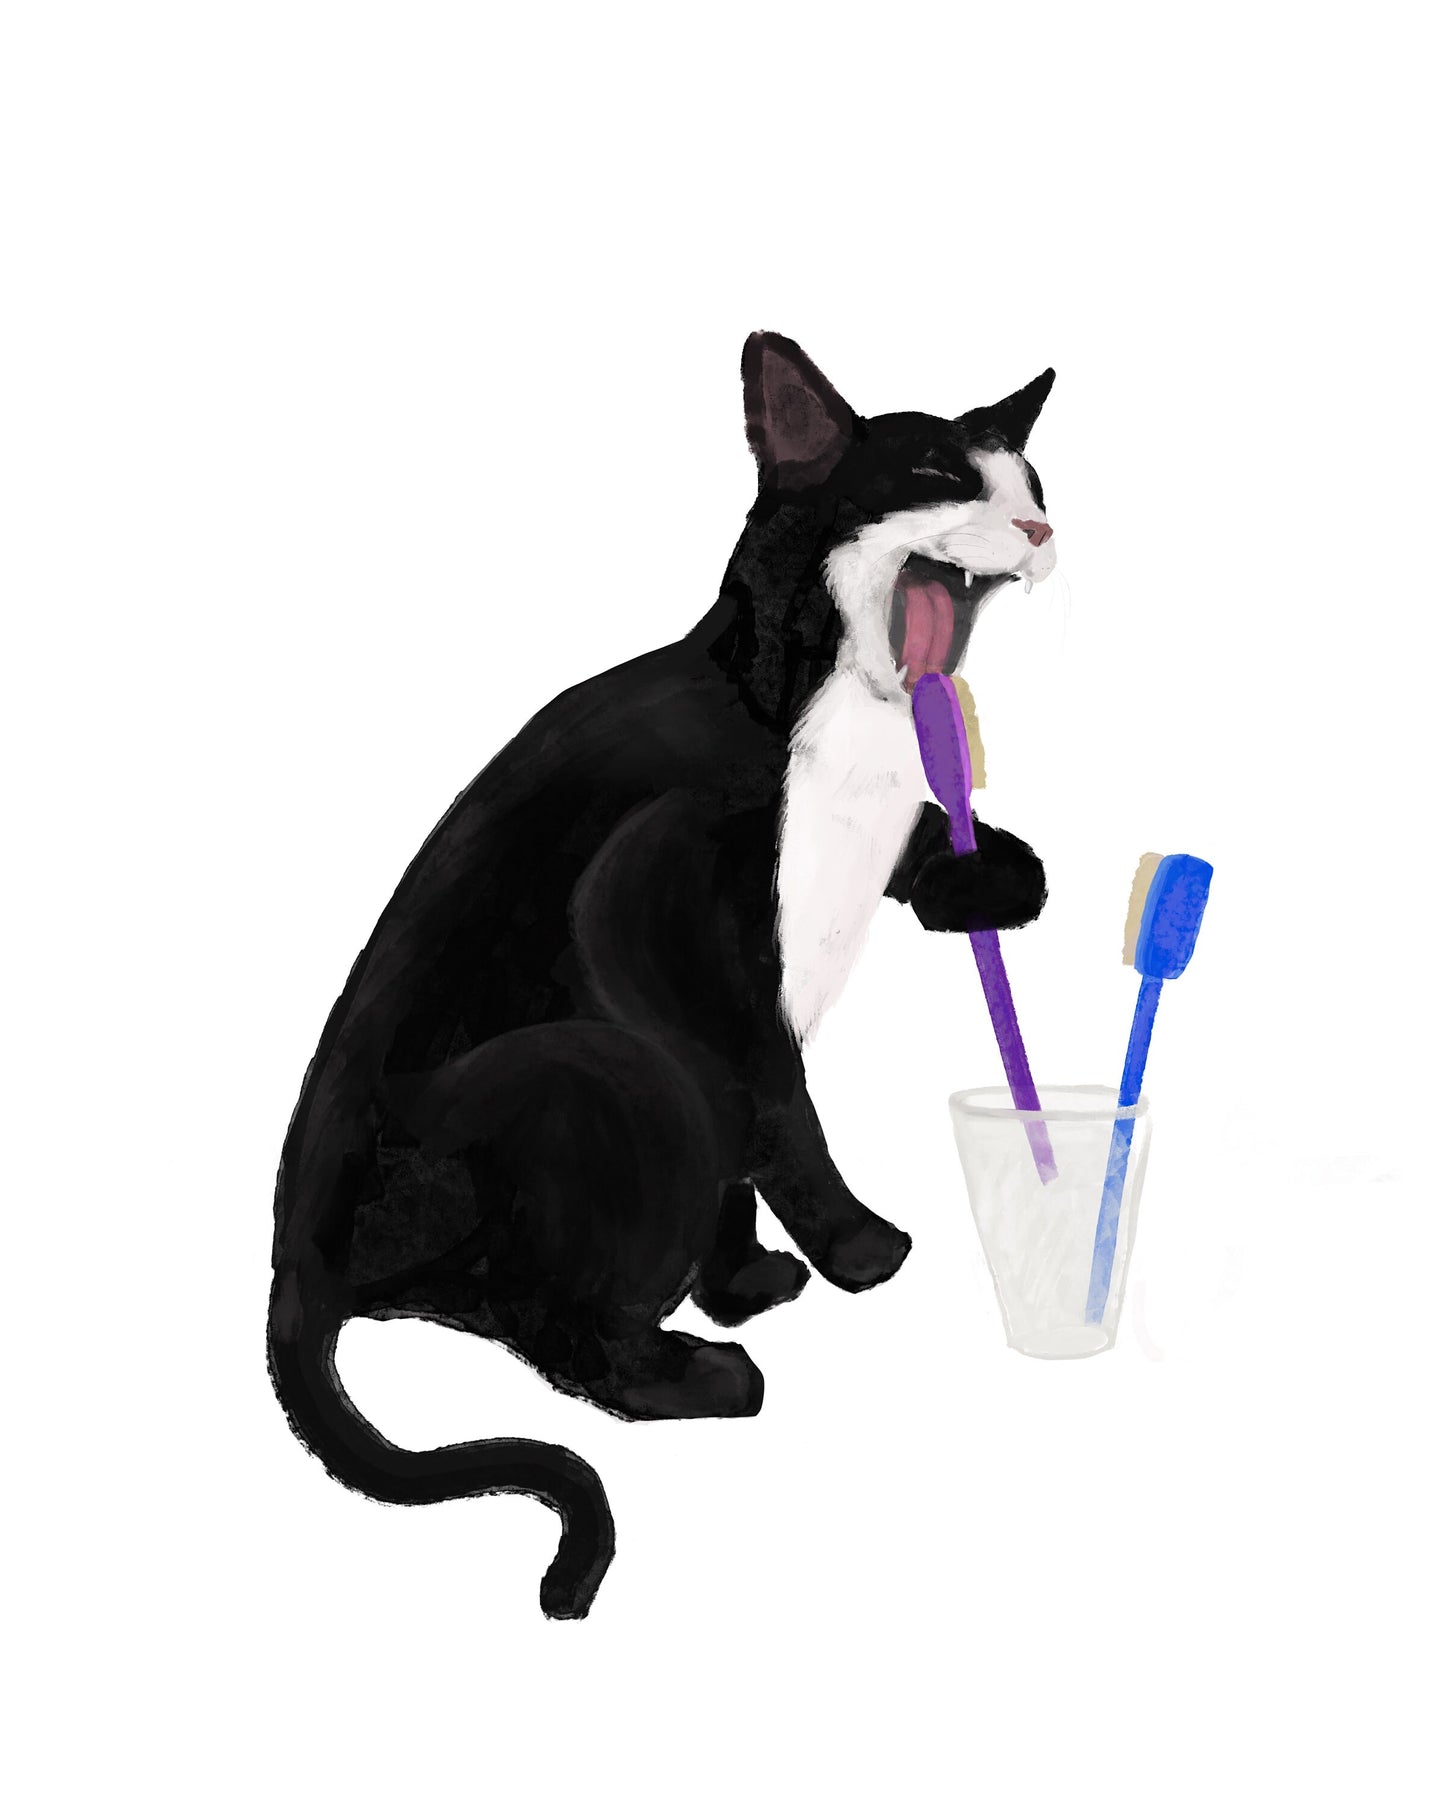 Tuxedo Cat Licking Toothbrush, Black and White Cat Brushing Teeth, Bathroom Art, Bathroom Cat Painting, Cat In Bath Print, Cat Lover Gift